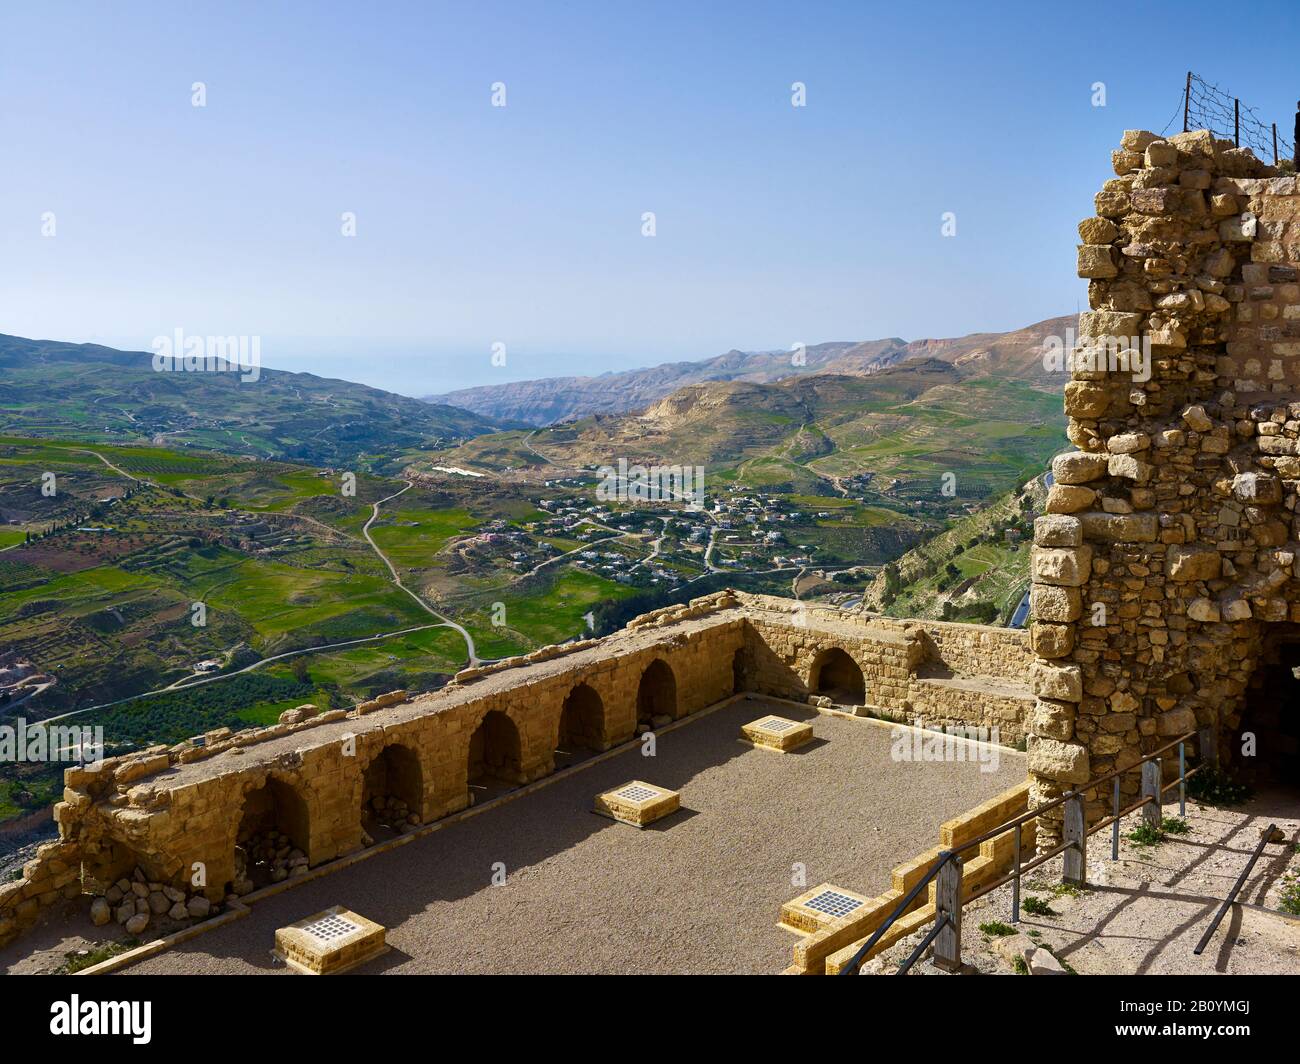 View from the crusader castle Kerak in Karak, Jordan, Middle East, Stock Photo